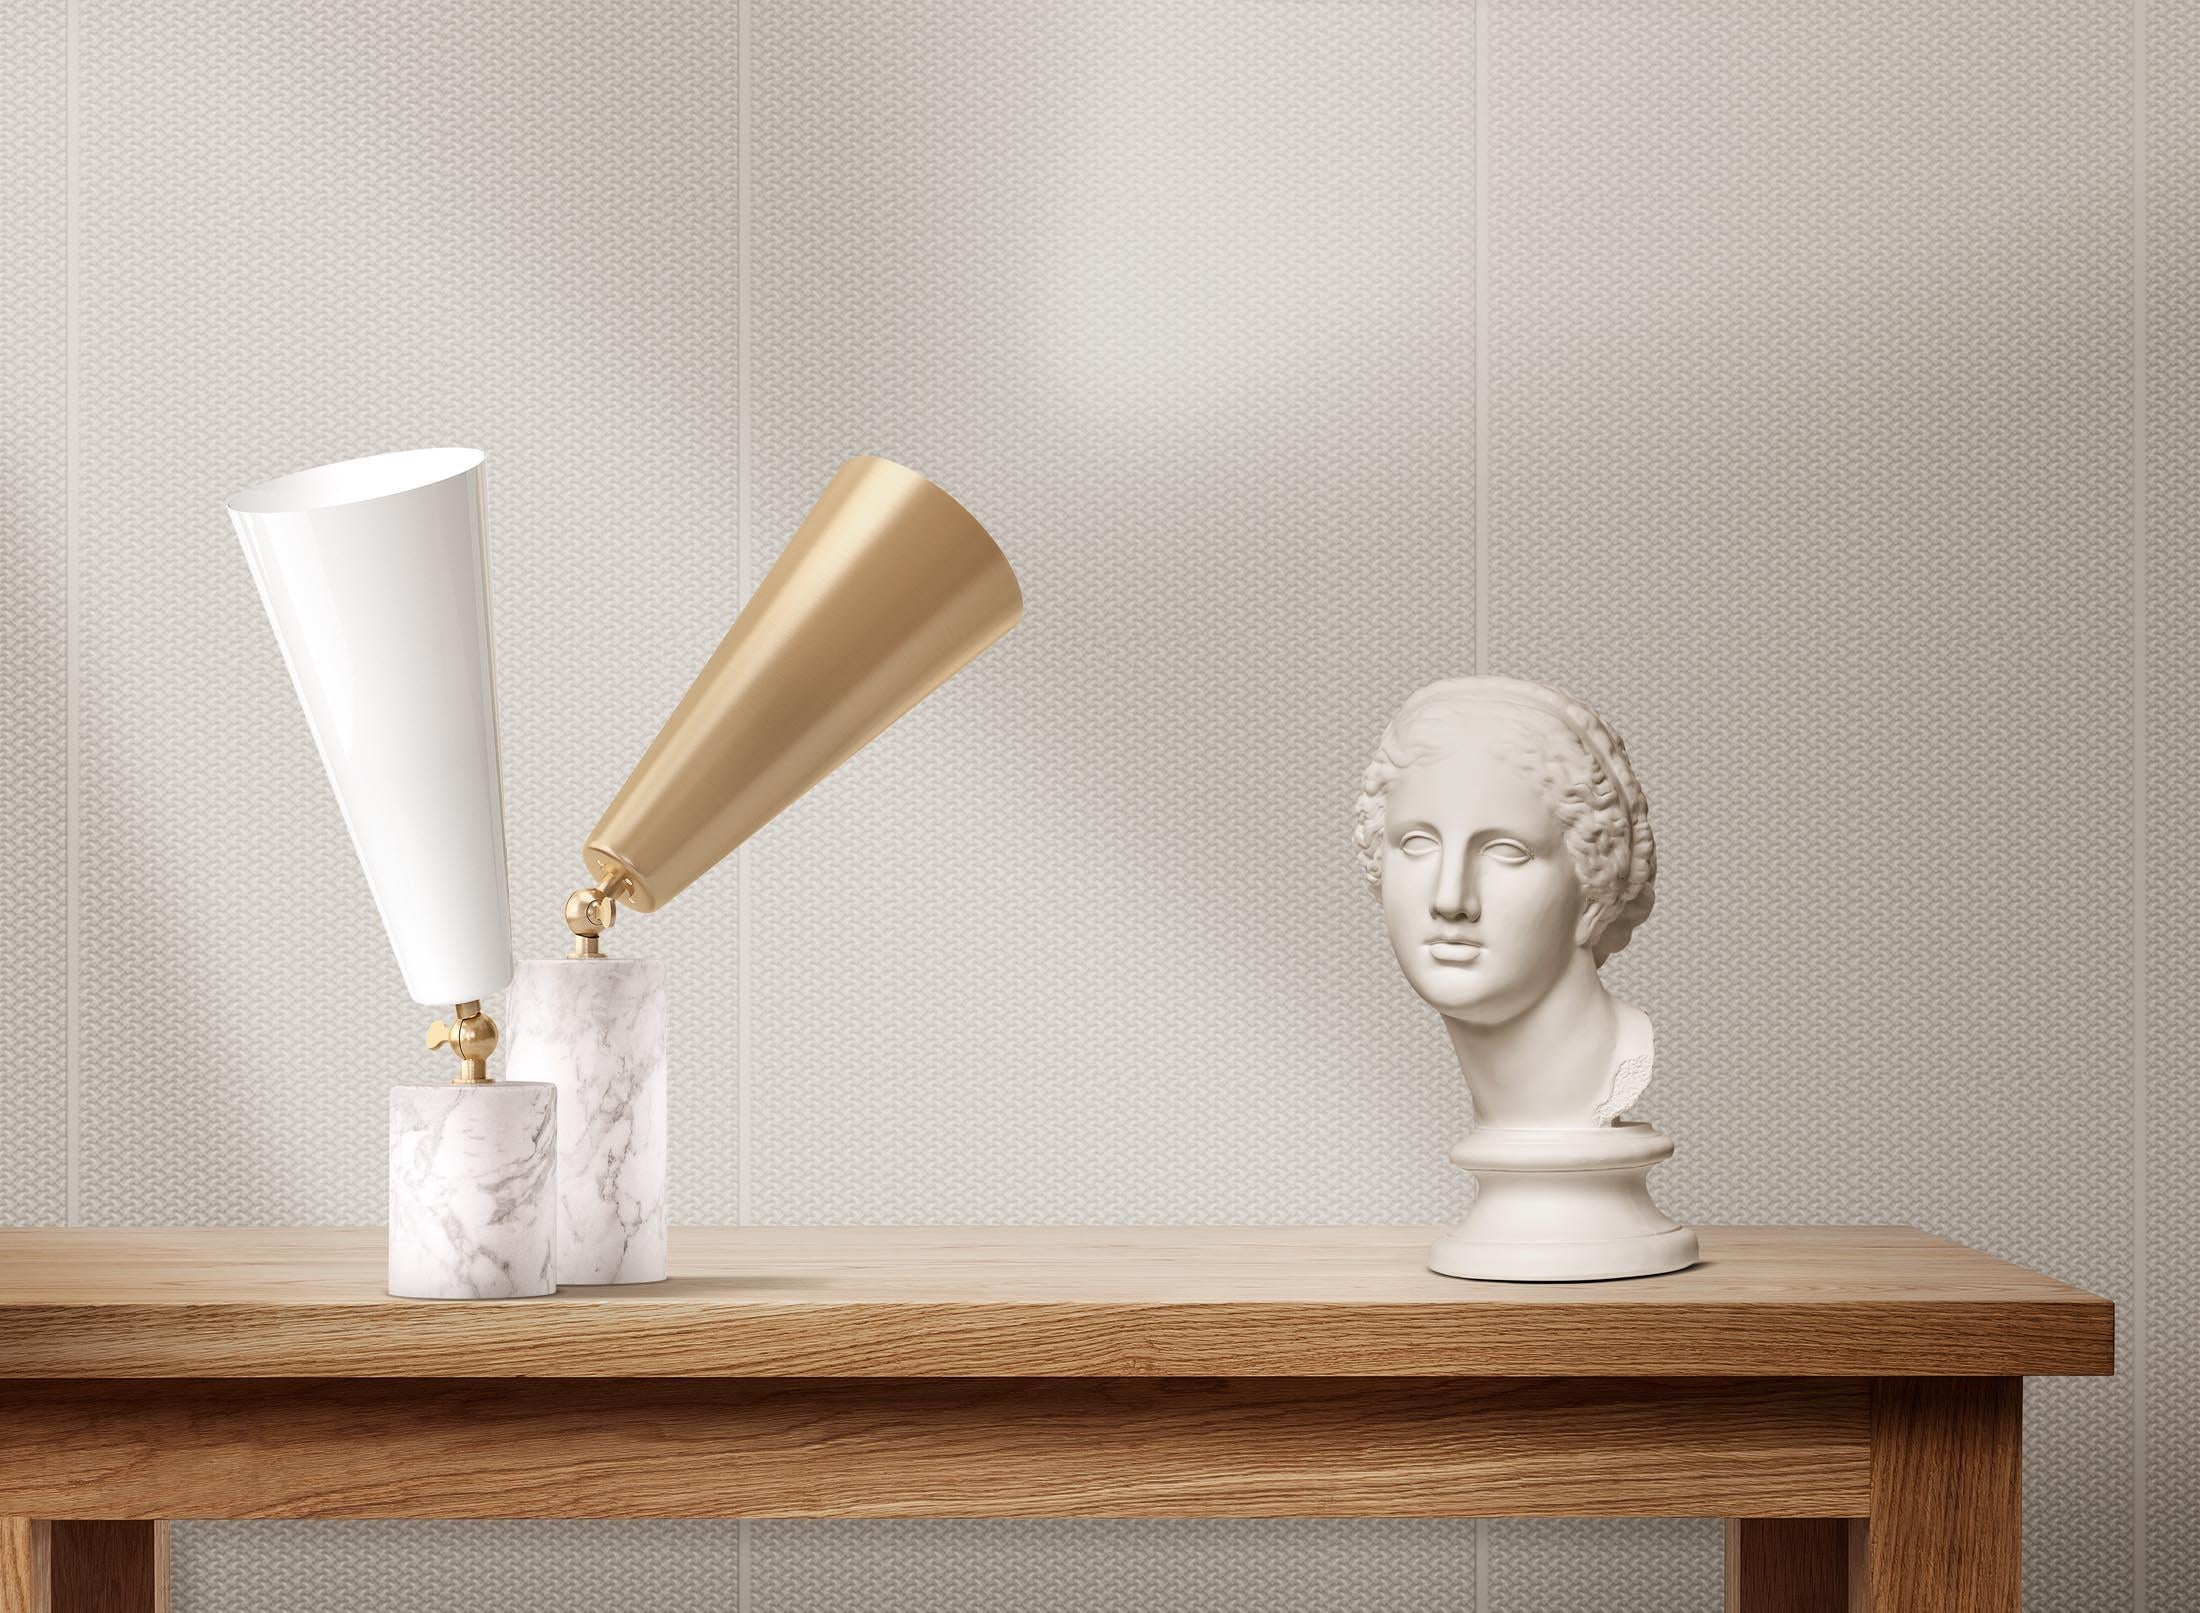 Aluminum Tato Italia 'Vox' Table Lamp in White Carrara Marble, Satin Brass, and White For Sale